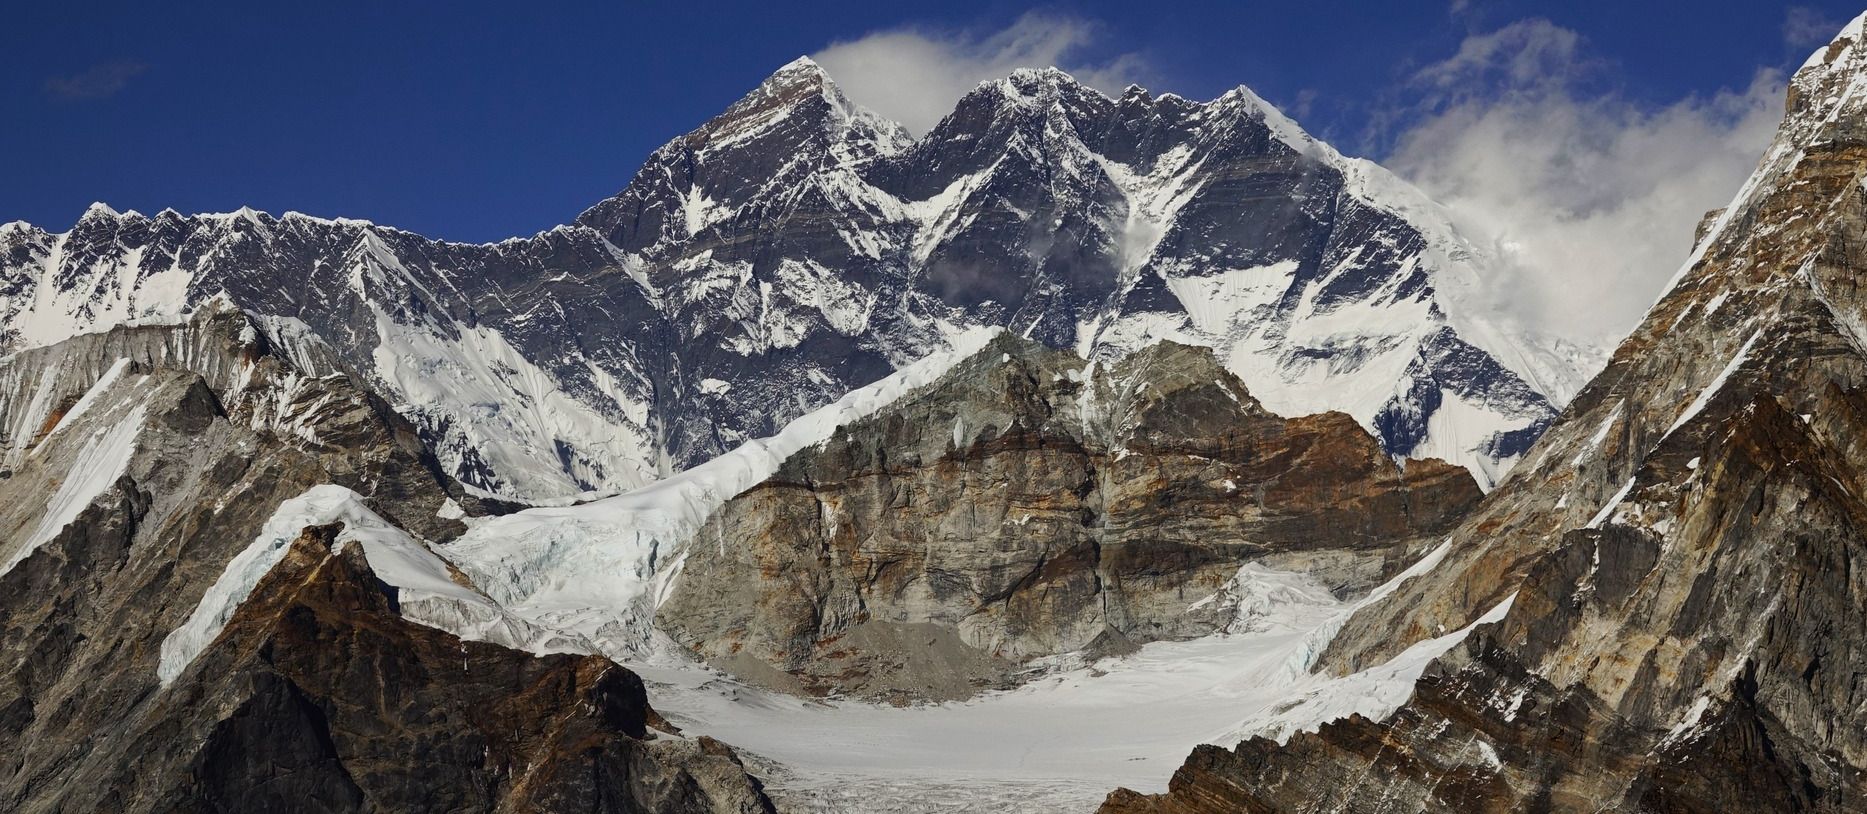 Nuptse, Everest and Lhotse